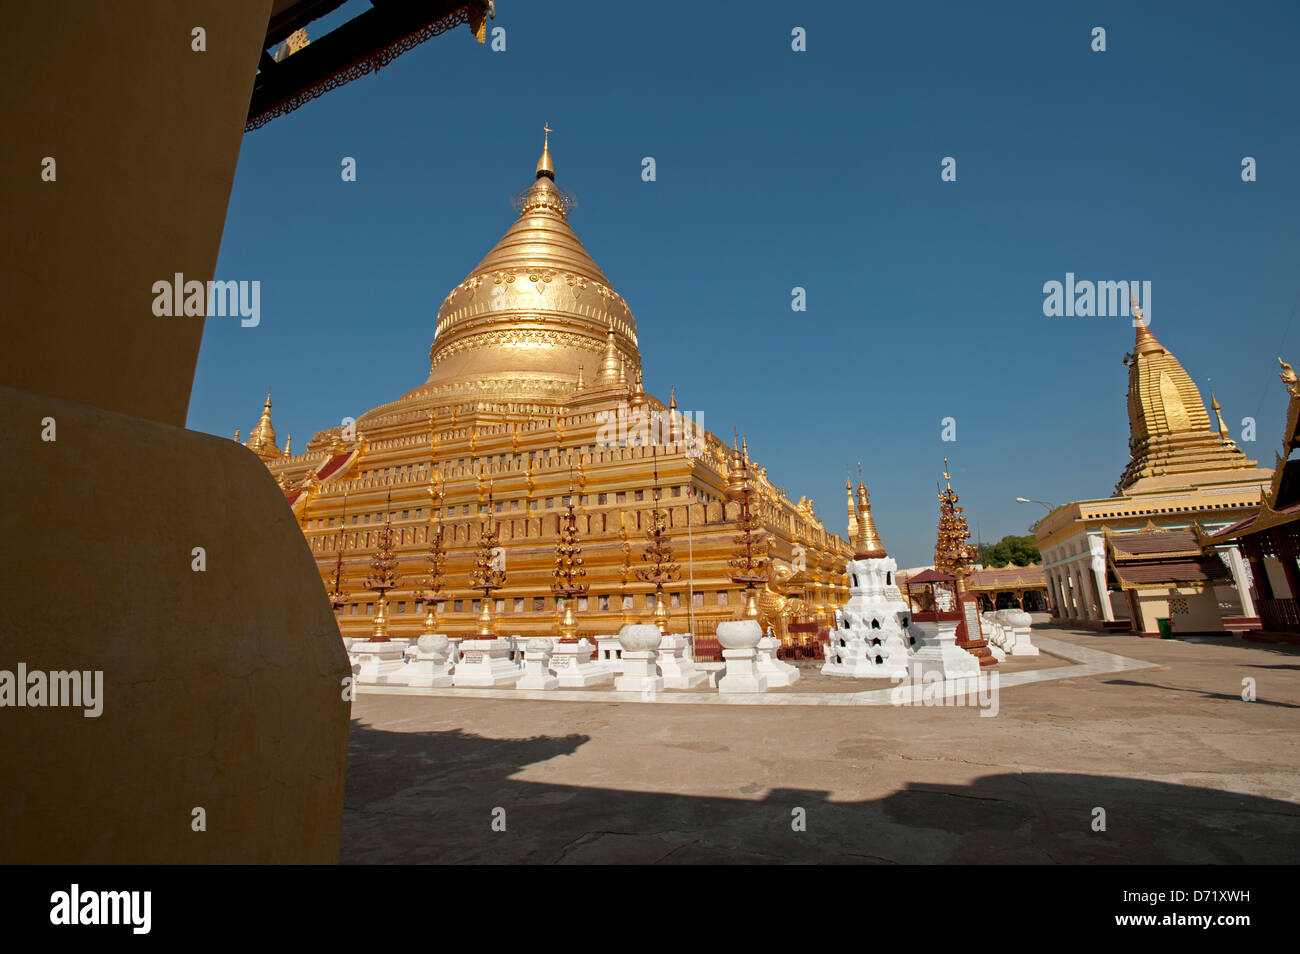 Le grand dôme d'or de la Pagode Shwezigon Bagan Myanmar (Birmanie) Banque D'Images